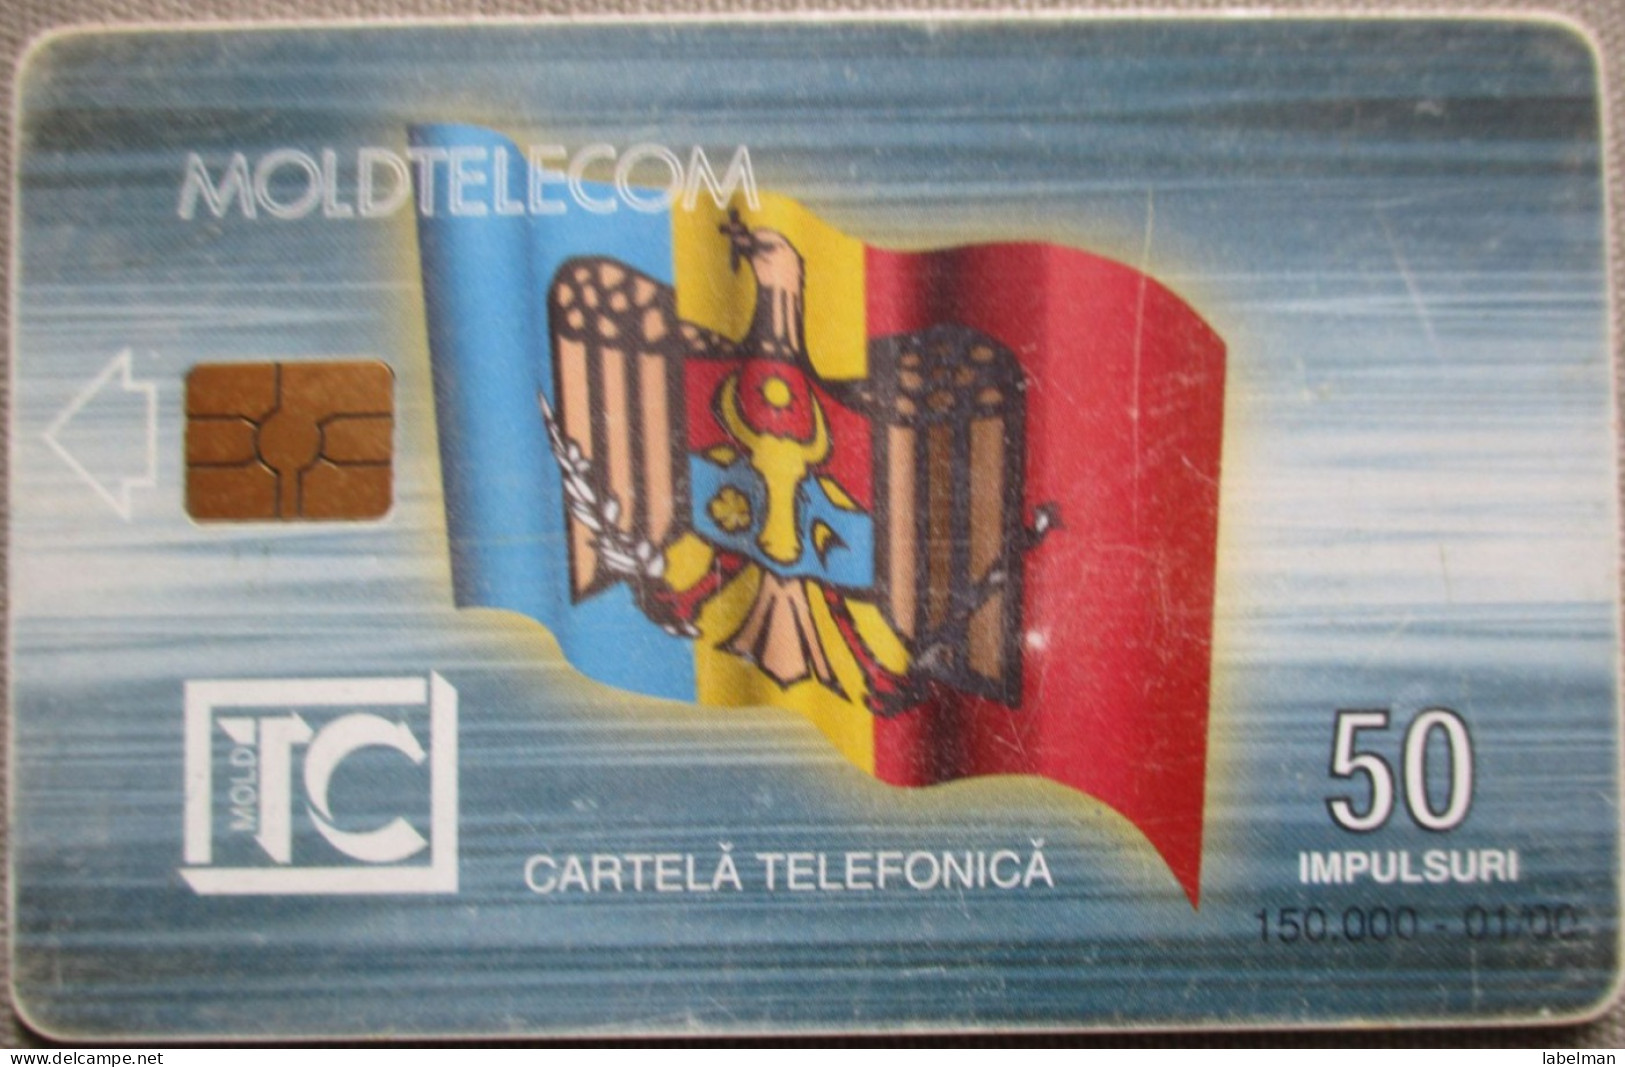 MOLDOVA MOLDTELECOM TELEPHONE PHONE TELEFONWERTKARTE PHONECARD CARTELA CARD CARTE KARTE COLLECTOR BEZEQ 50 UNITS - Moldova